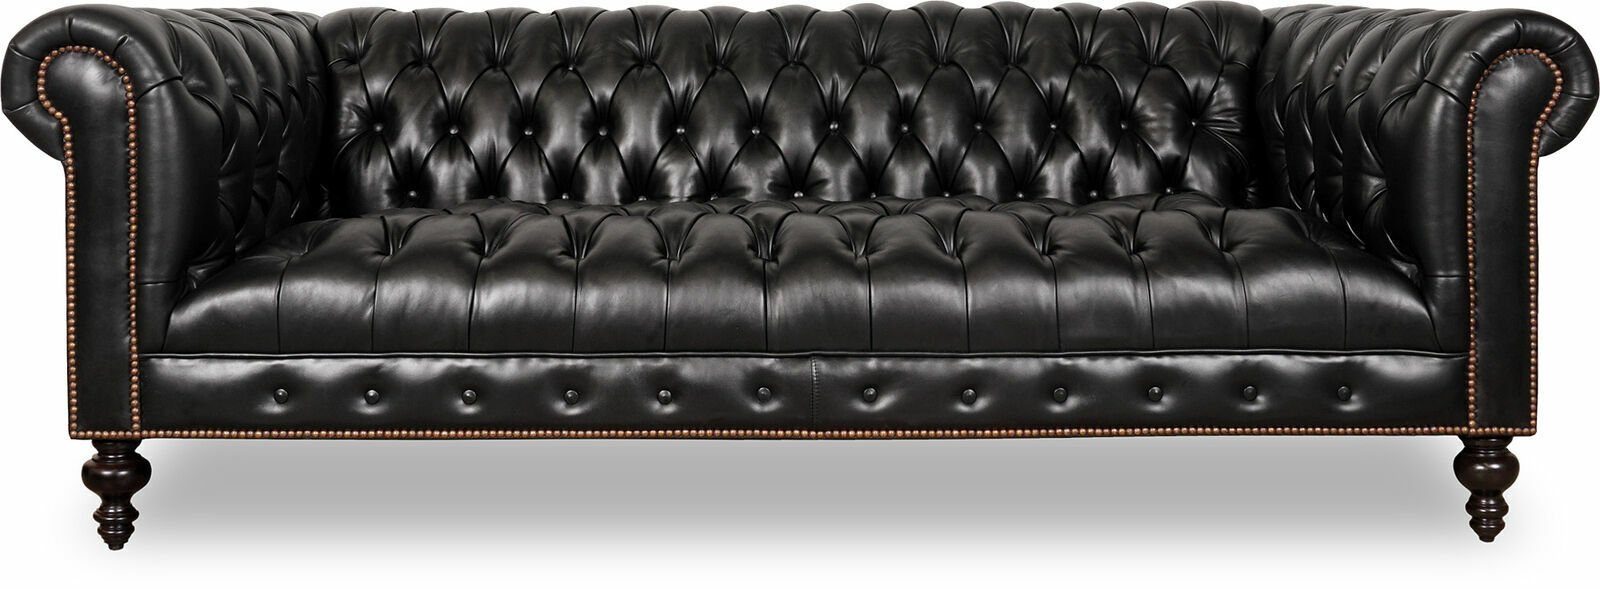 Leder JVmoebel Chesterfield-Sofa Sofa in 1 Schwarz Sofort, Teile, Couch Europa Chesterfield 100% Made Leder England